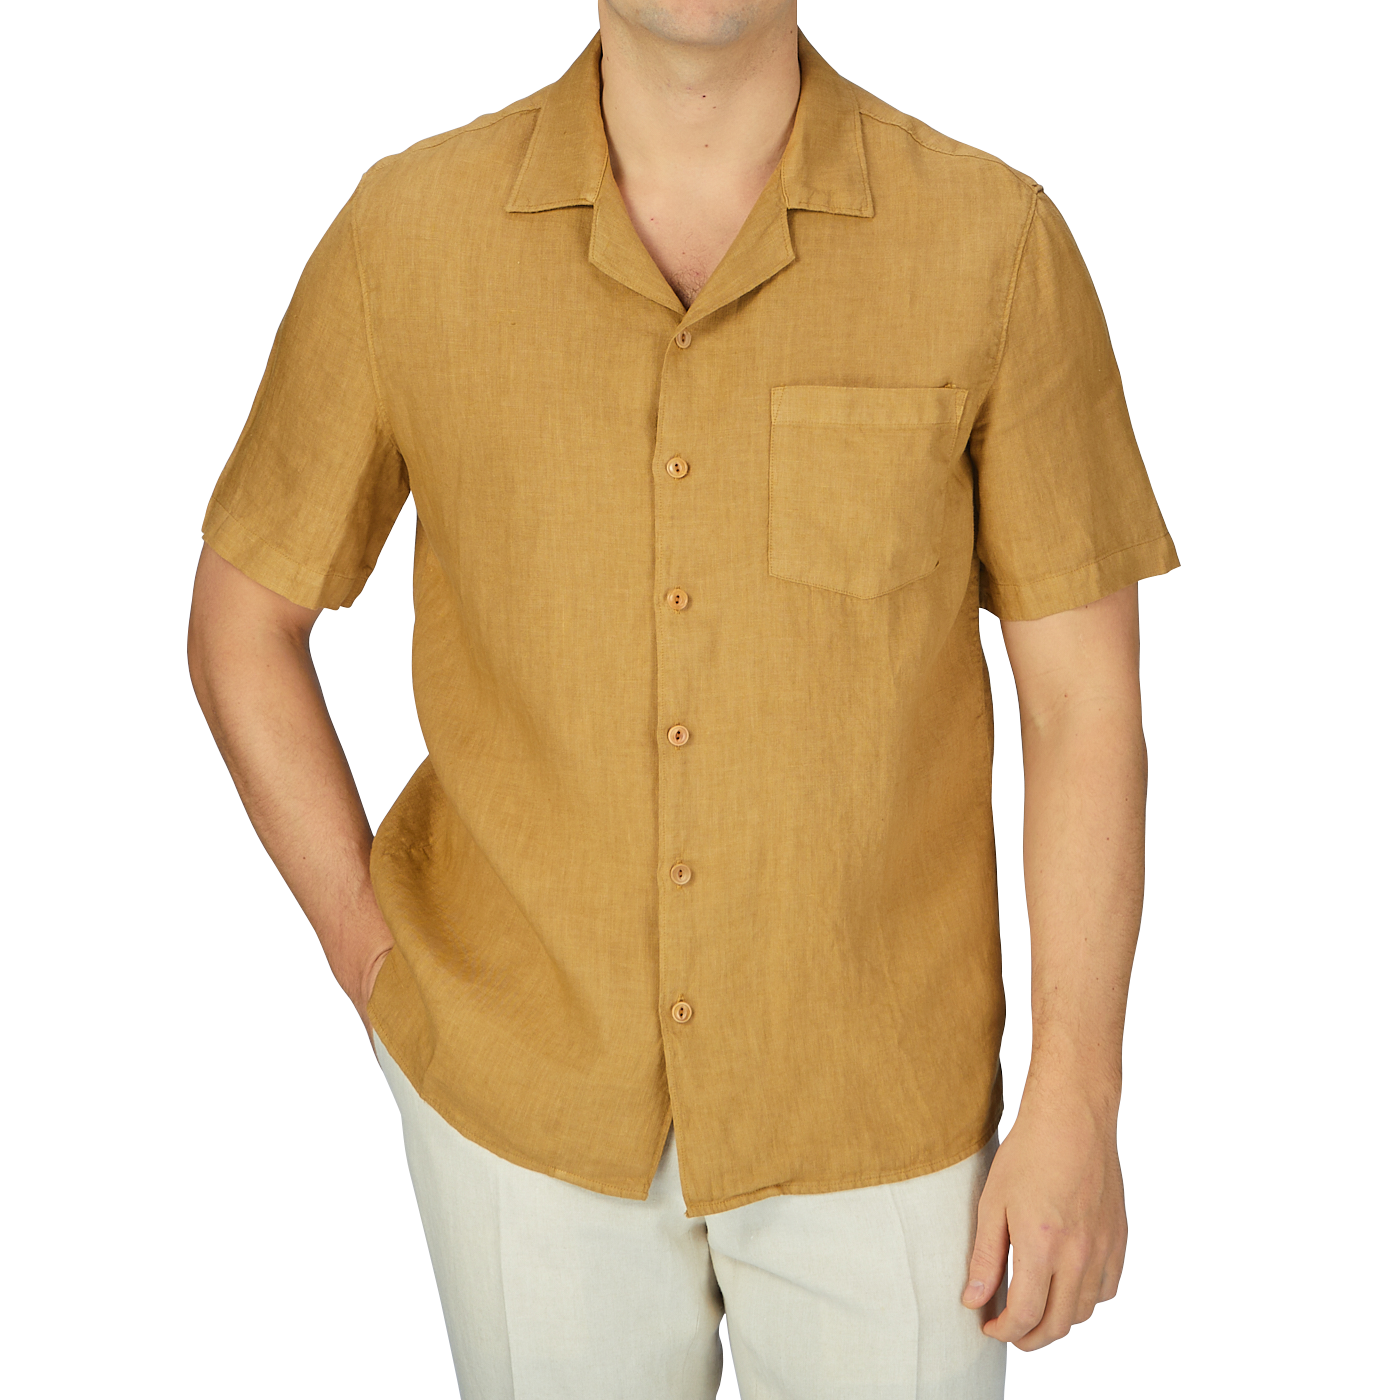 Men's Tobacco Renato Linen Camp Collar Shirt in tan from Tela Genova, perfect for a summer feel.